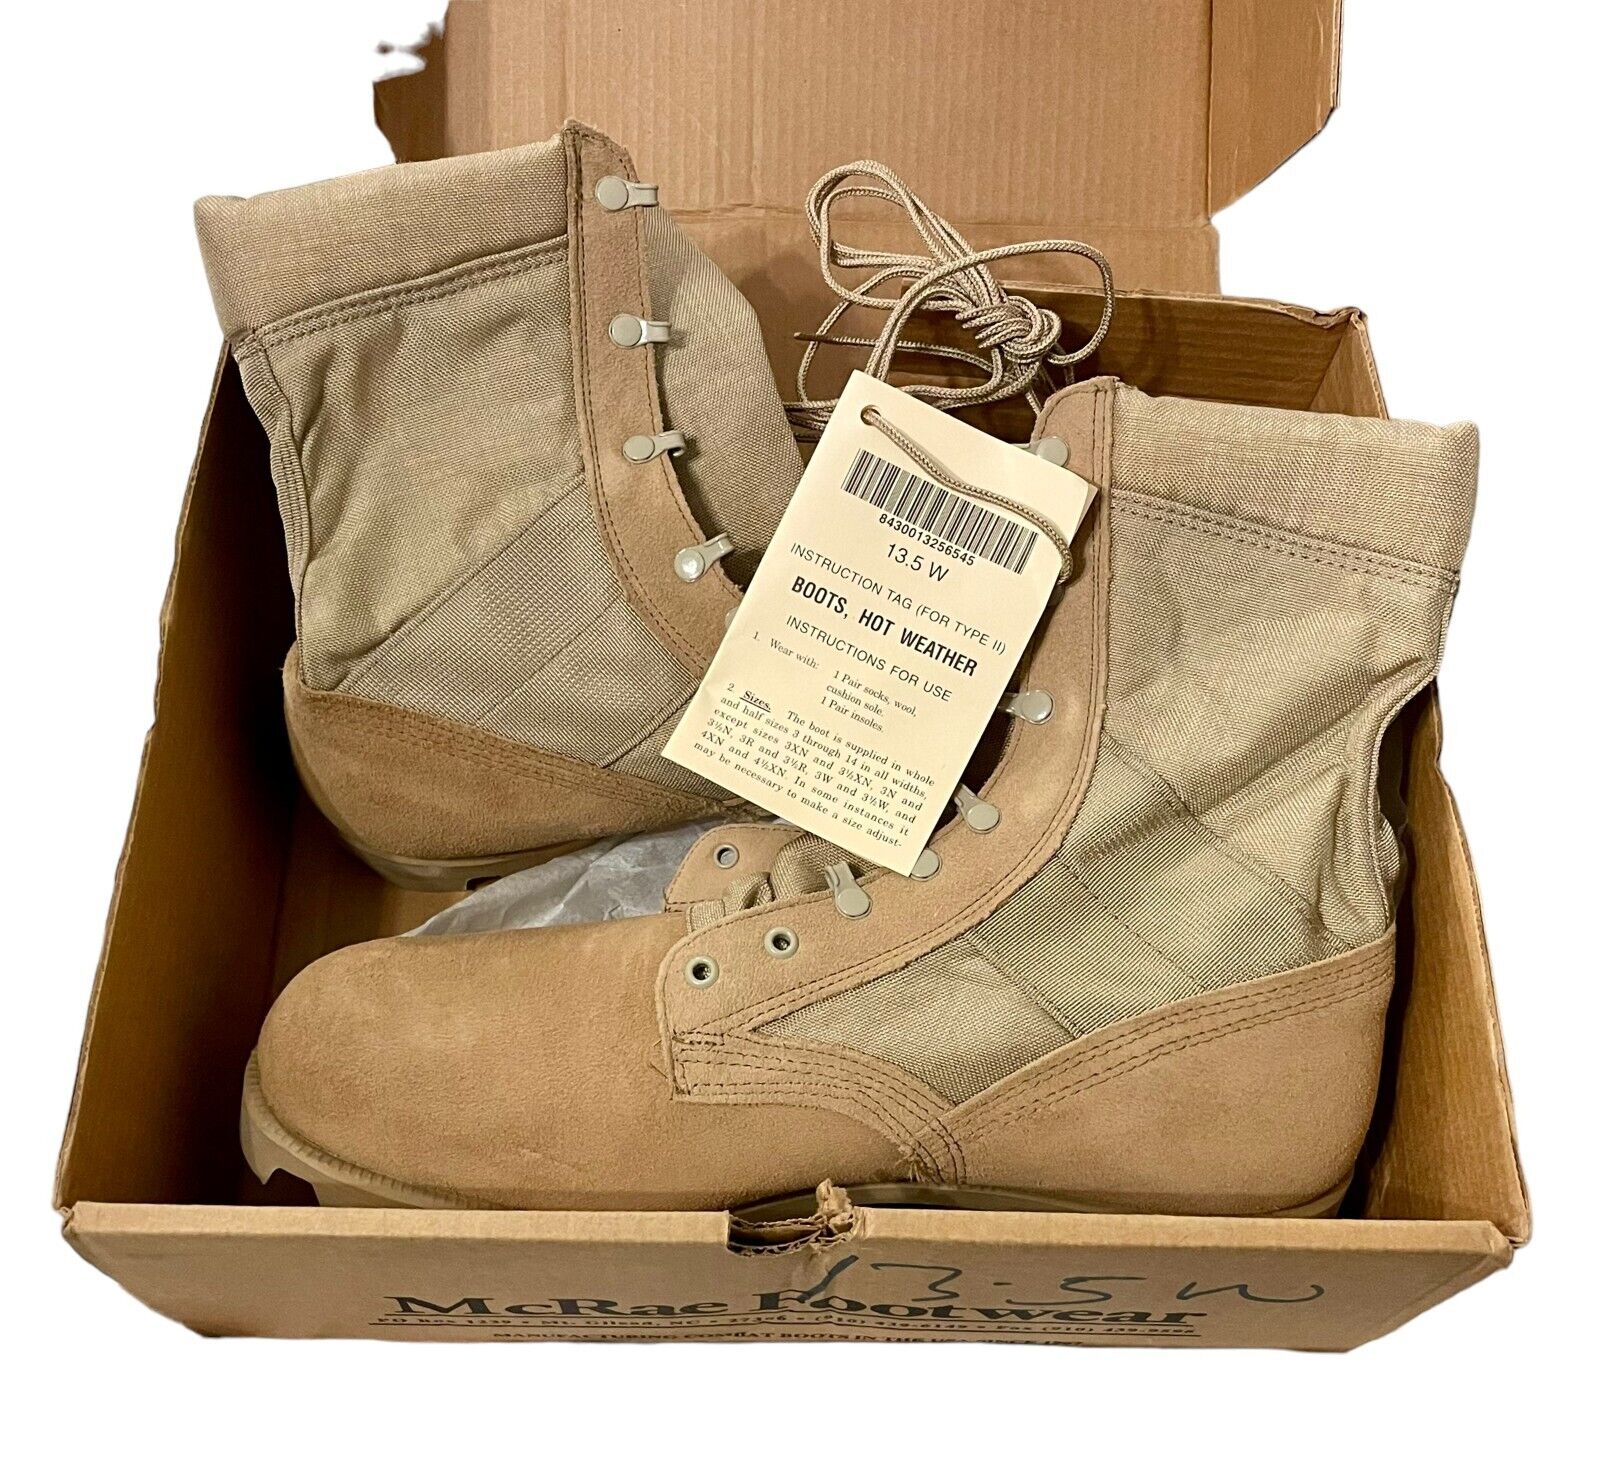 McRae Footwear USGI Army Combat Boot (Hot Weather) Men’s Size 13.5W